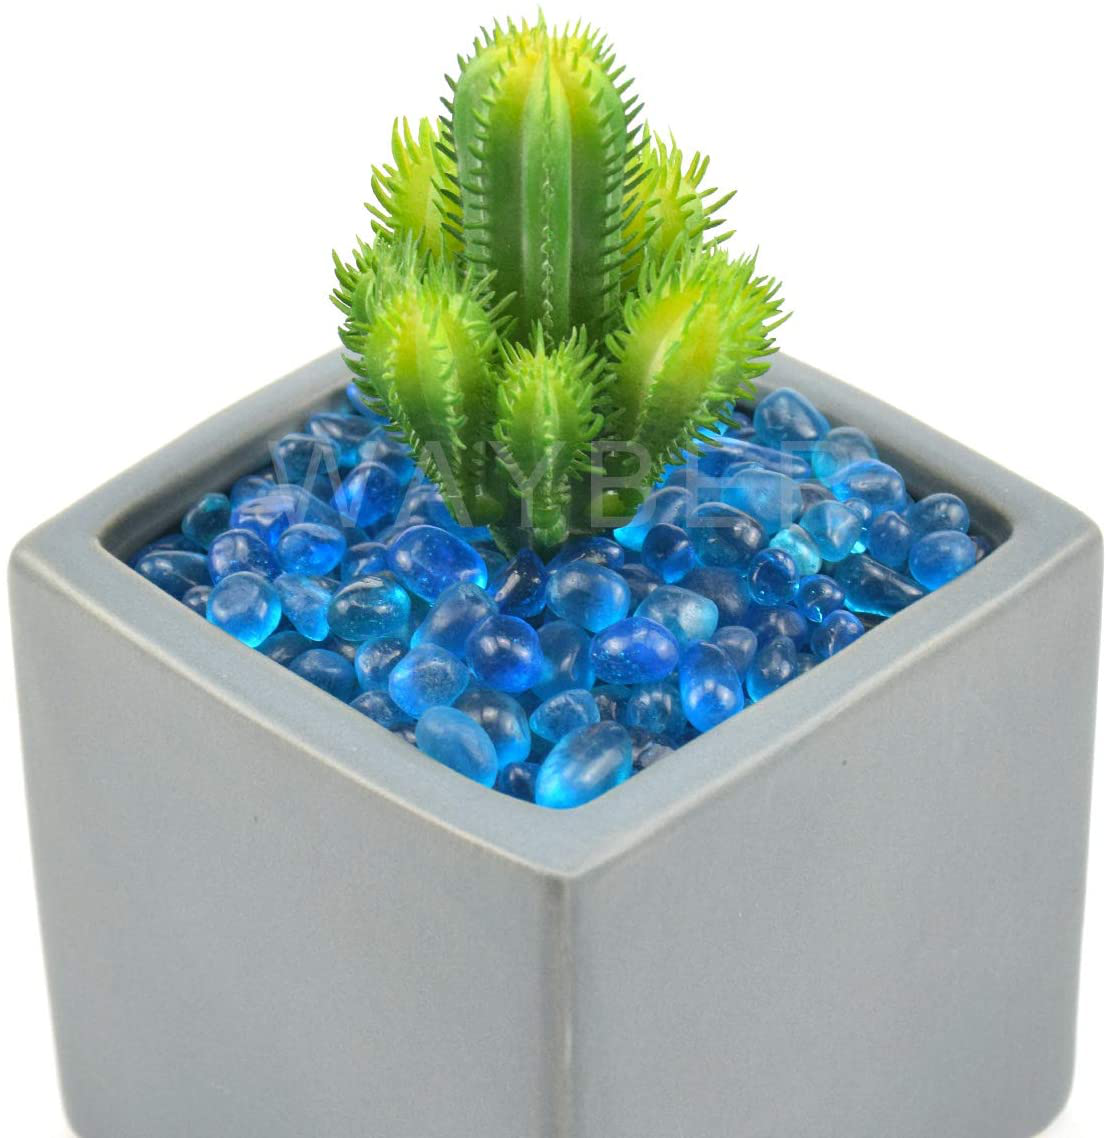 WAYBER Glass Stones, 1Lb/460G Irregular Sea Glass Pebbles Non-Toxic Artificial Crystal Gemstones for Aquarium Turtle Tank Vase Filler Terrarium Flowerpot Decoration, Lake Blue